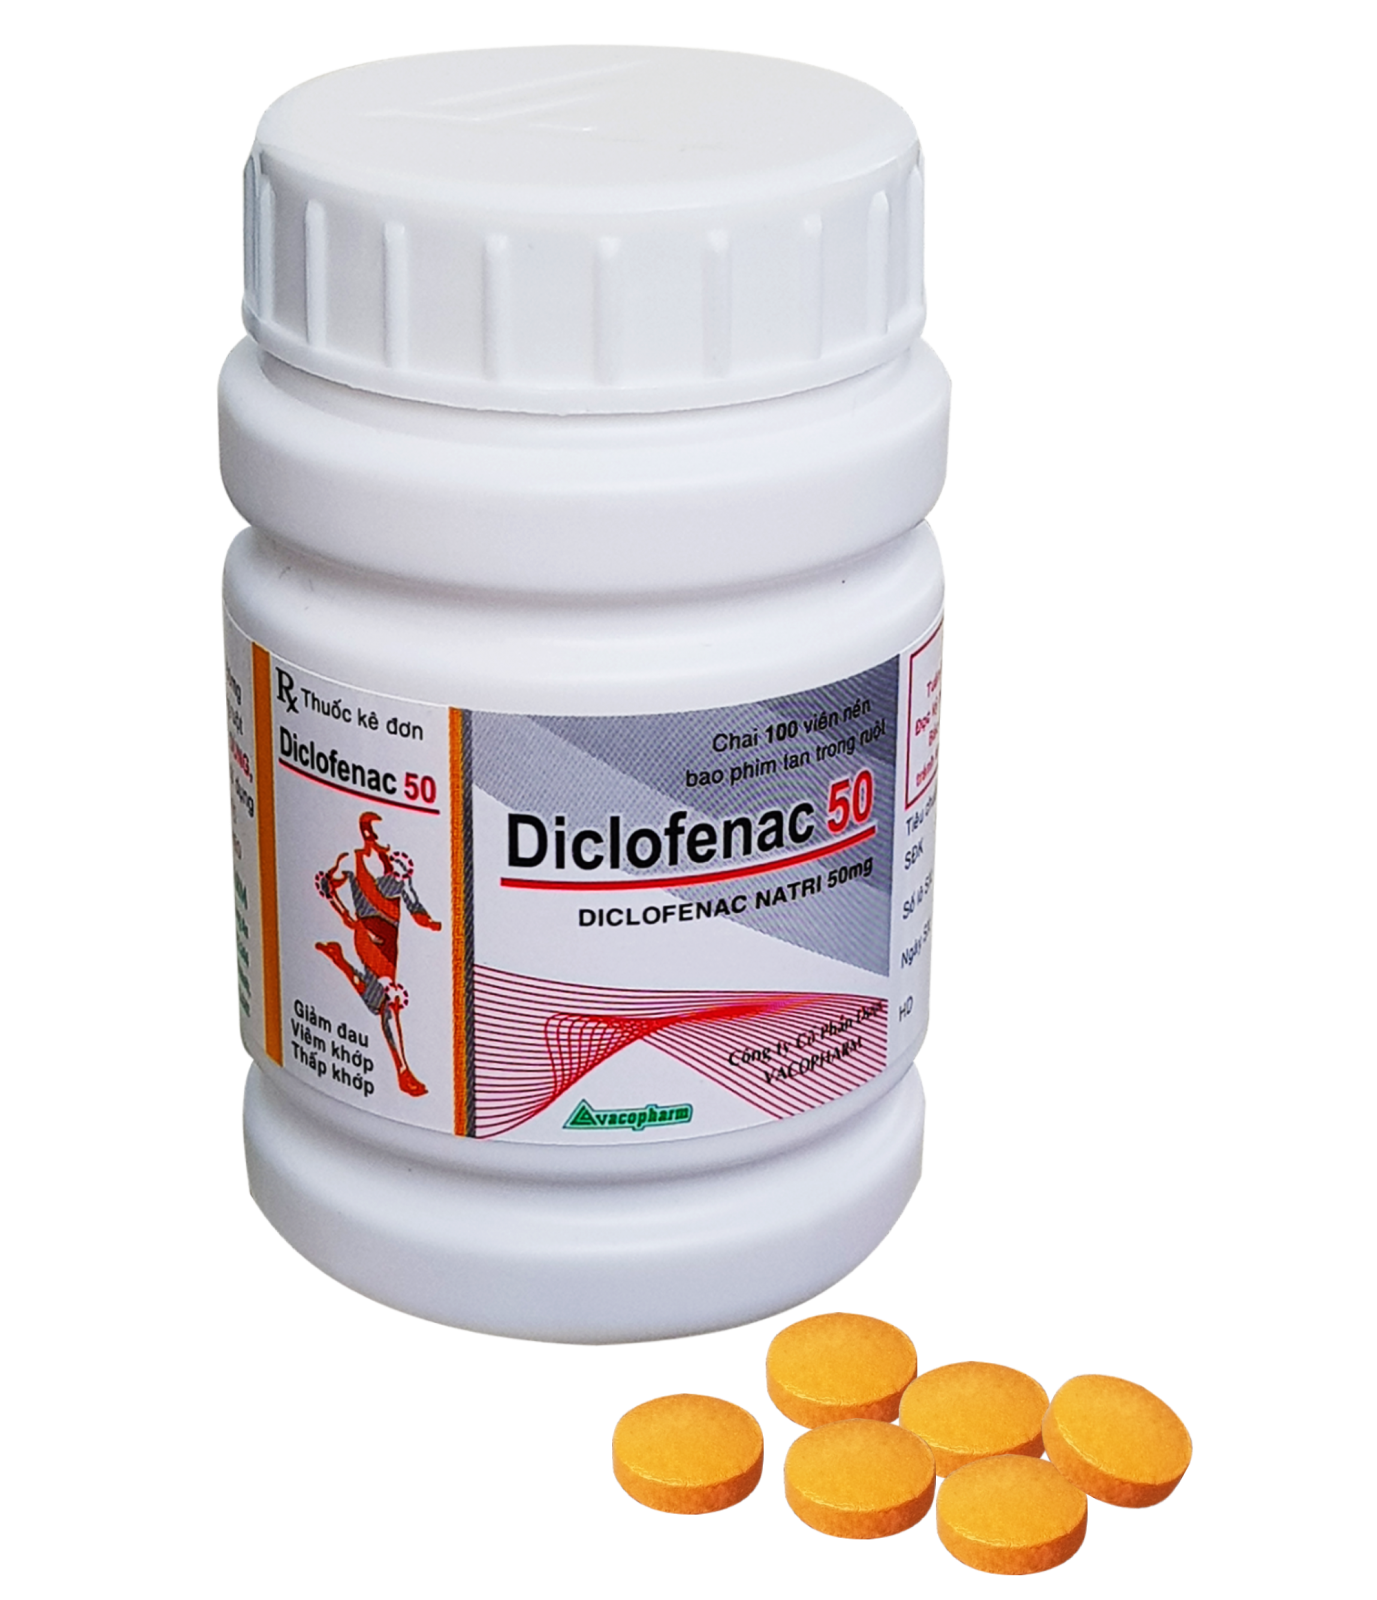 DICLOFENAC 50 (Diclofenac sodium 50mg) Chai 100 viên